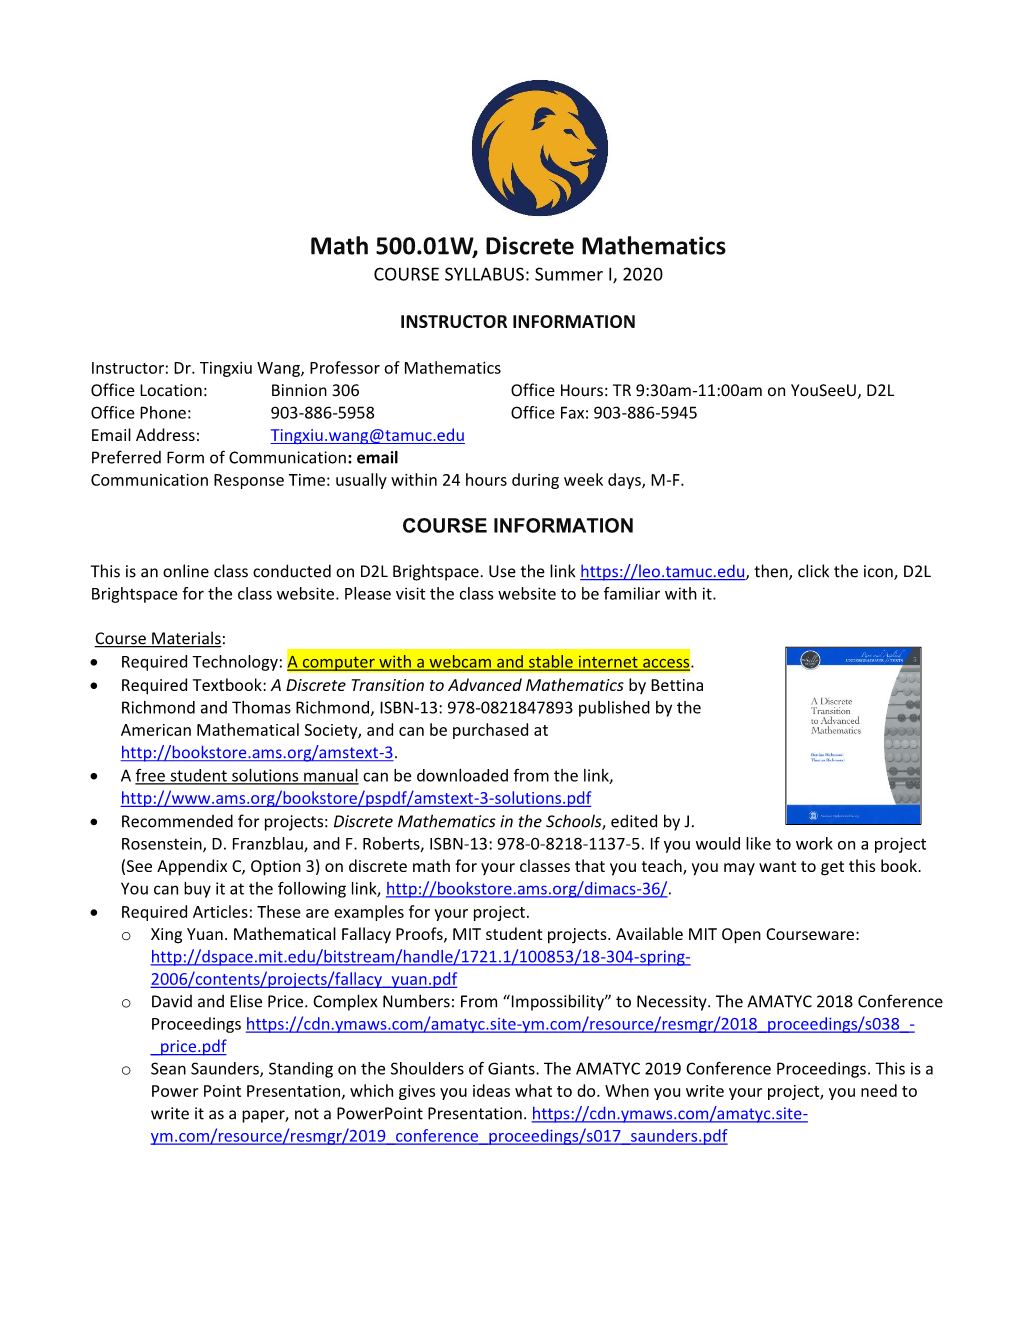 Math 500.01W, Discrete Mathematics COURSE SYLLABUS: Summer I, 2020